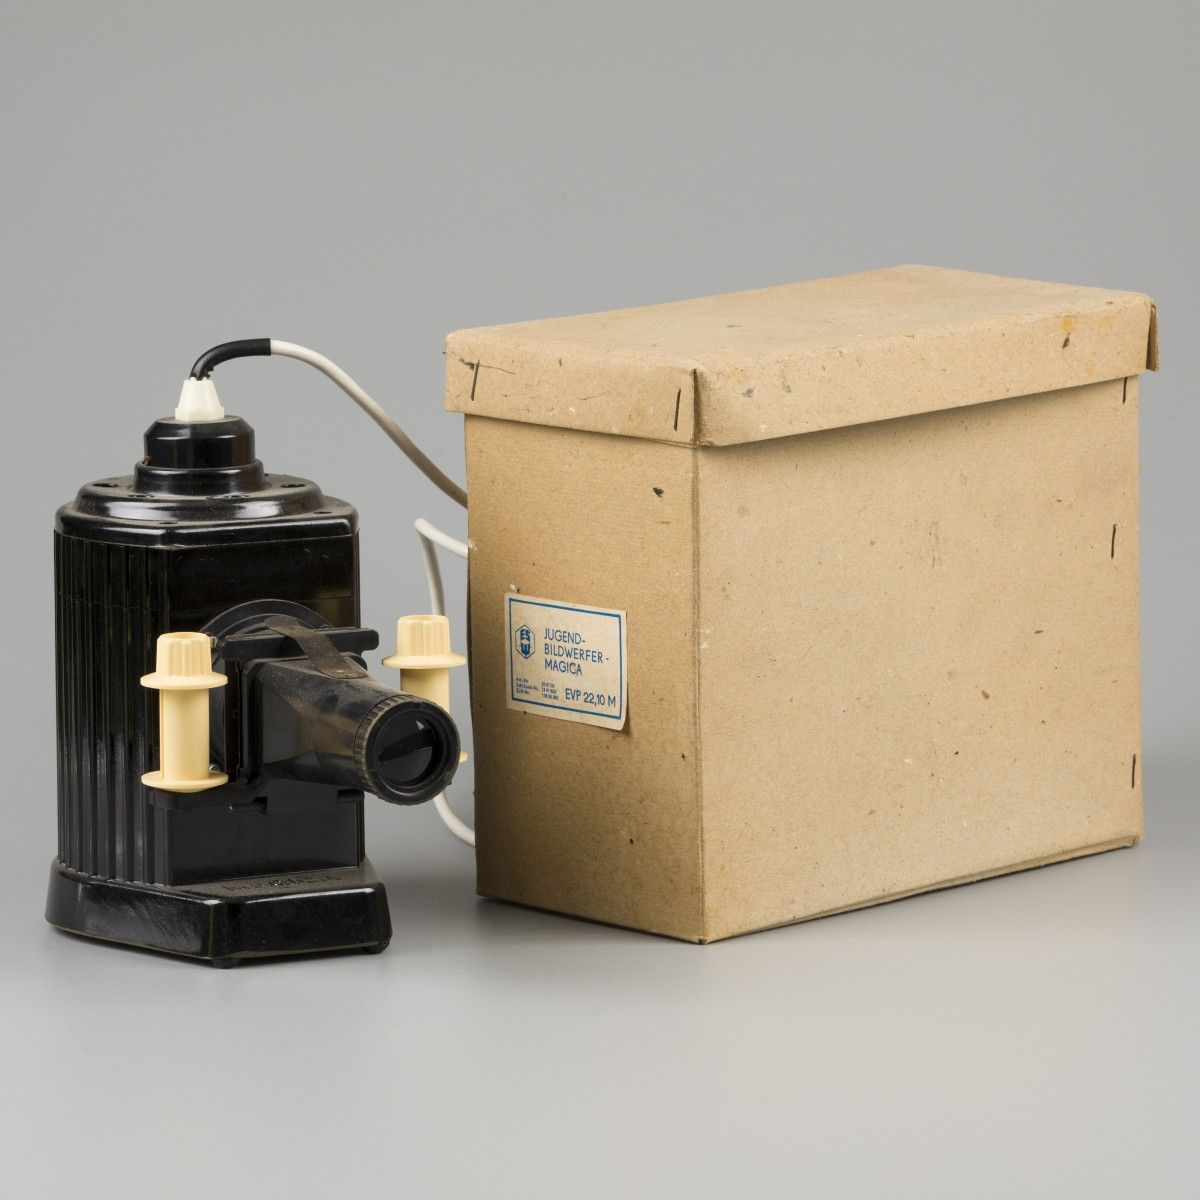 A bakelite magic lantern "Jugend Bildwerfer-Magica" EVP 22,10 mm. In original bo&hellip;